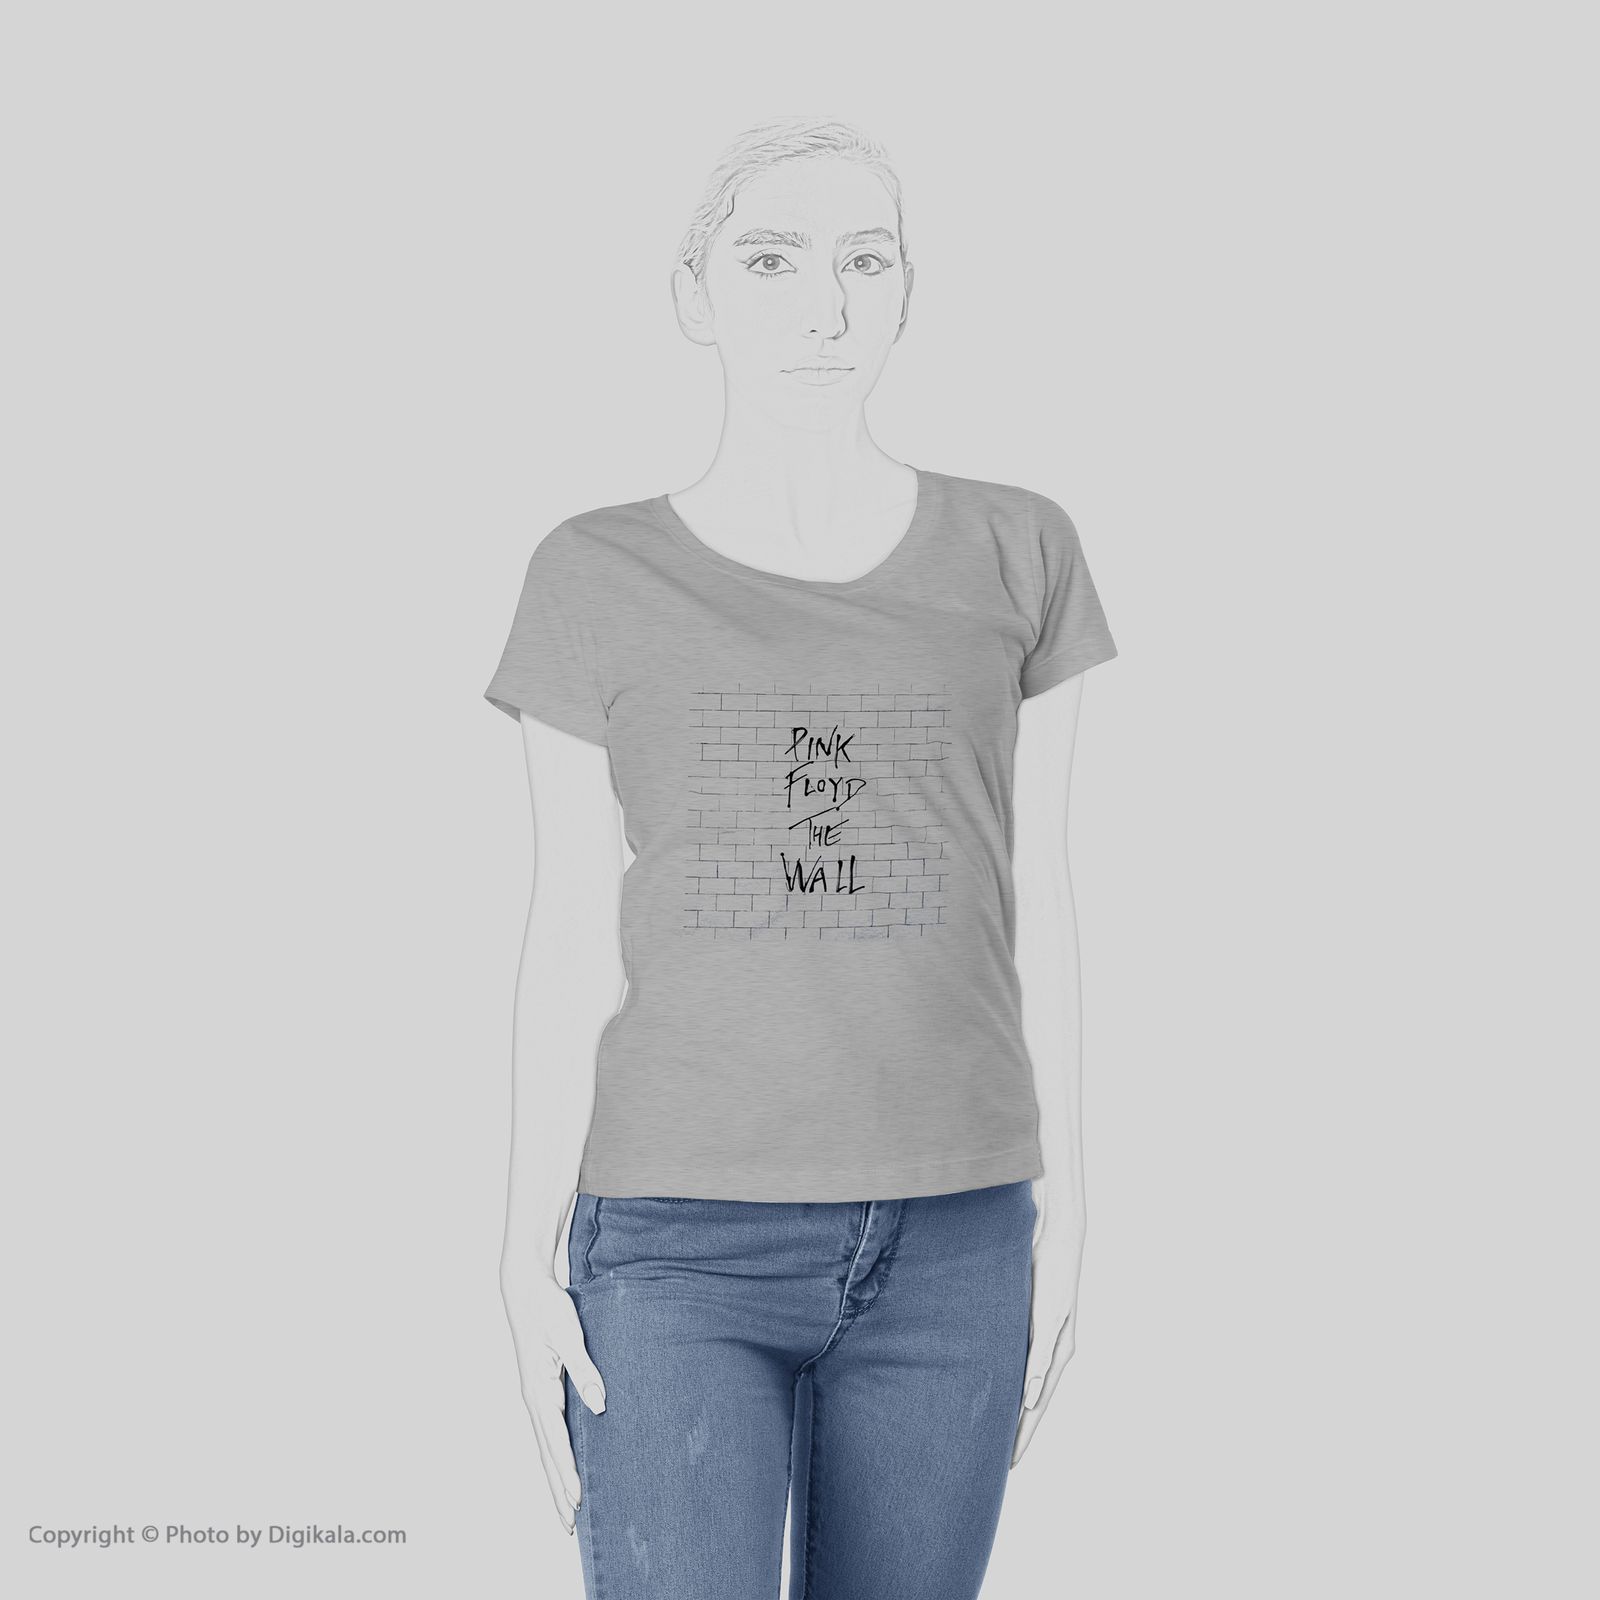 تی شرت زنانه به رسم طرح دیوار کد 479 -  - 6